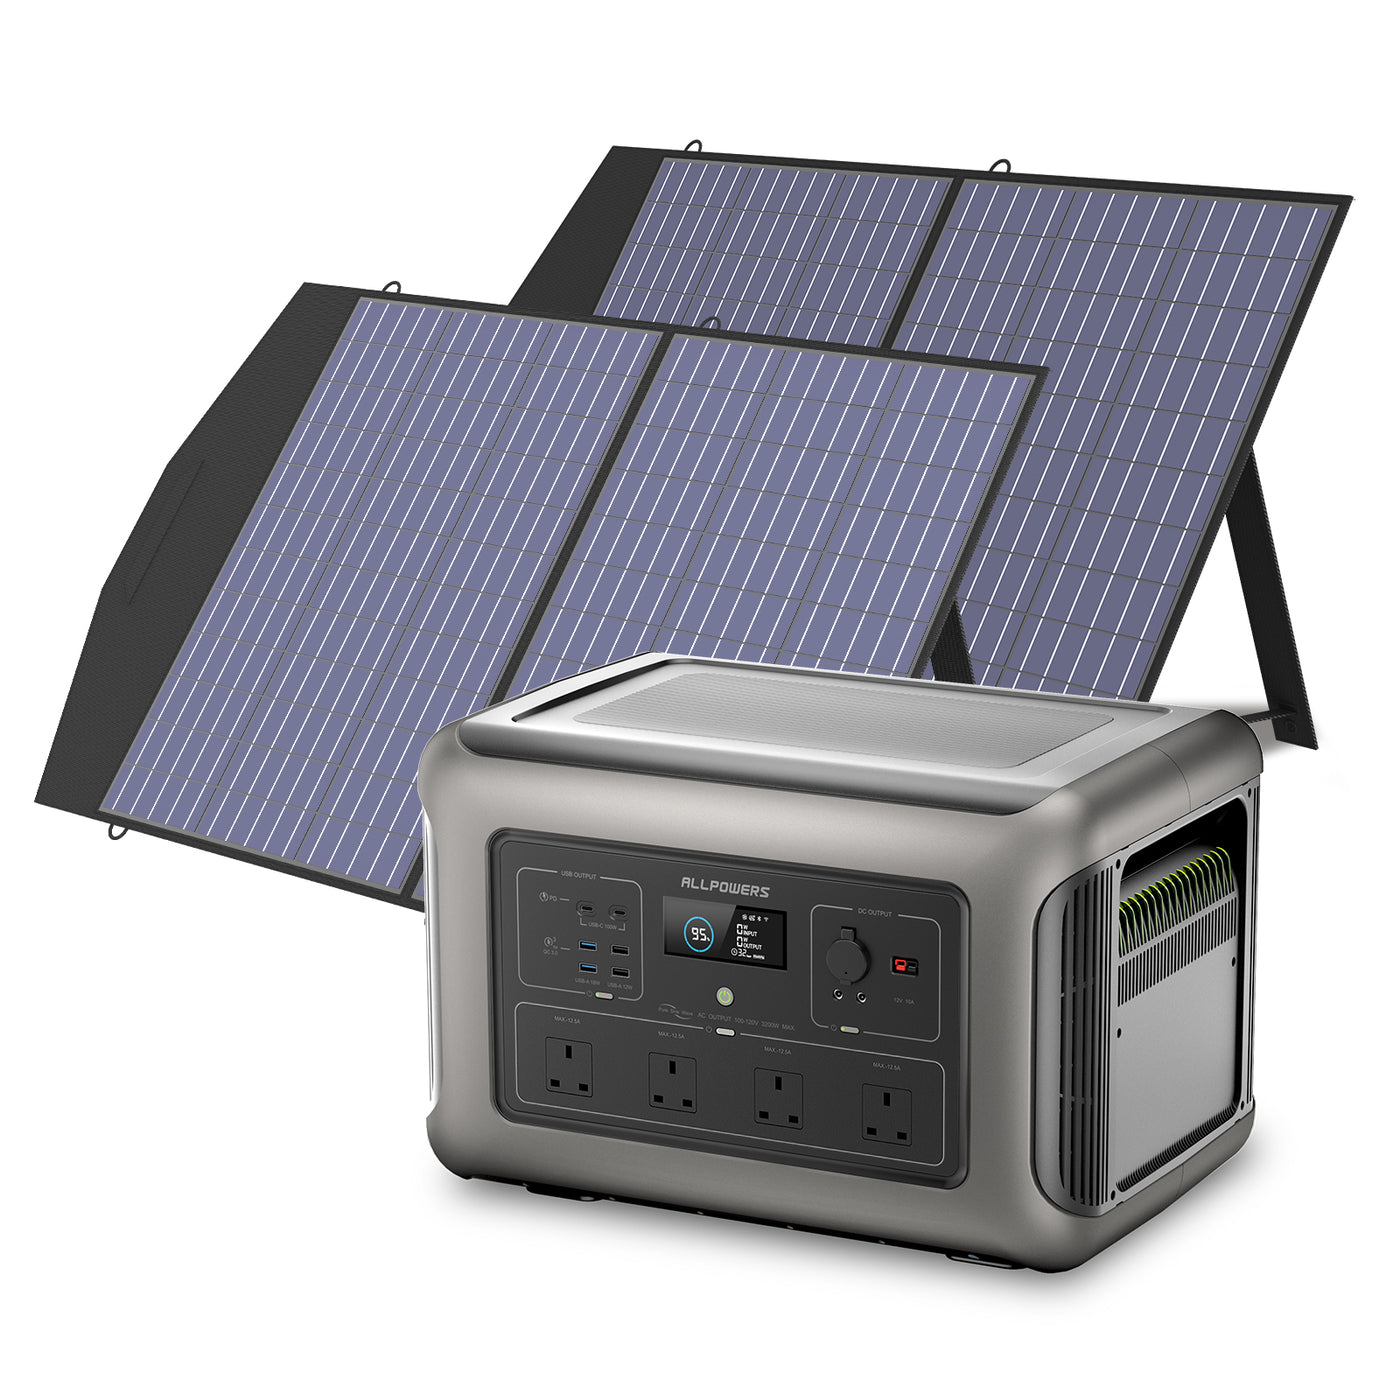 ALLPOWERS Solar Generator Kit (R3500 + SP027 100W Solar Panel)